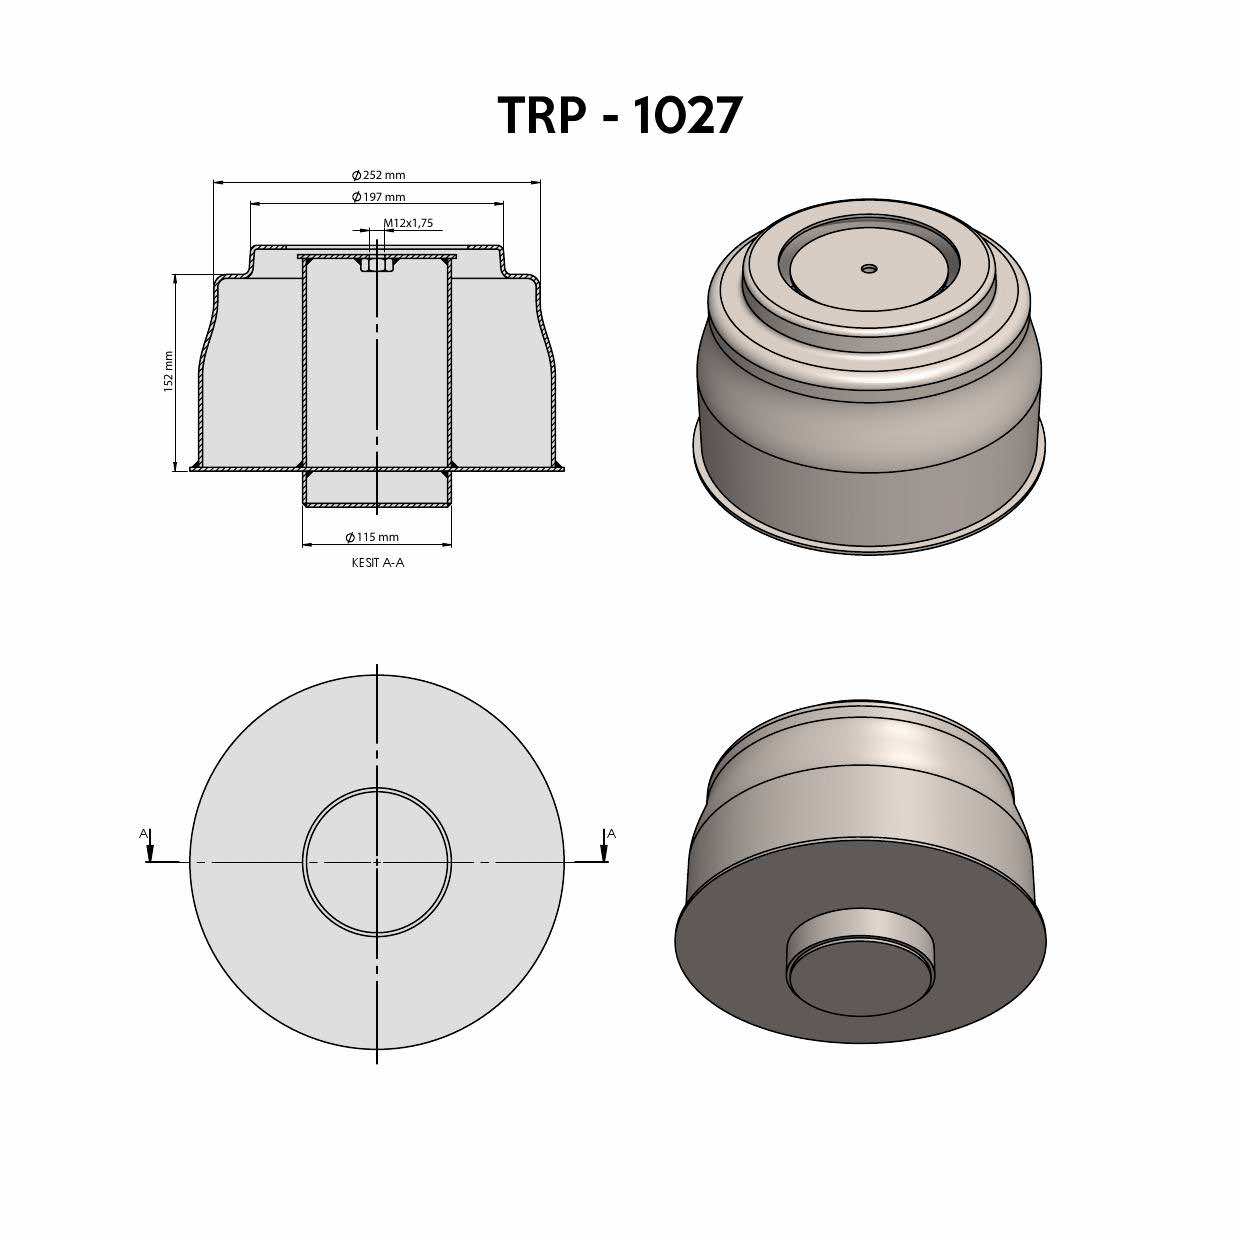 TRP-1027